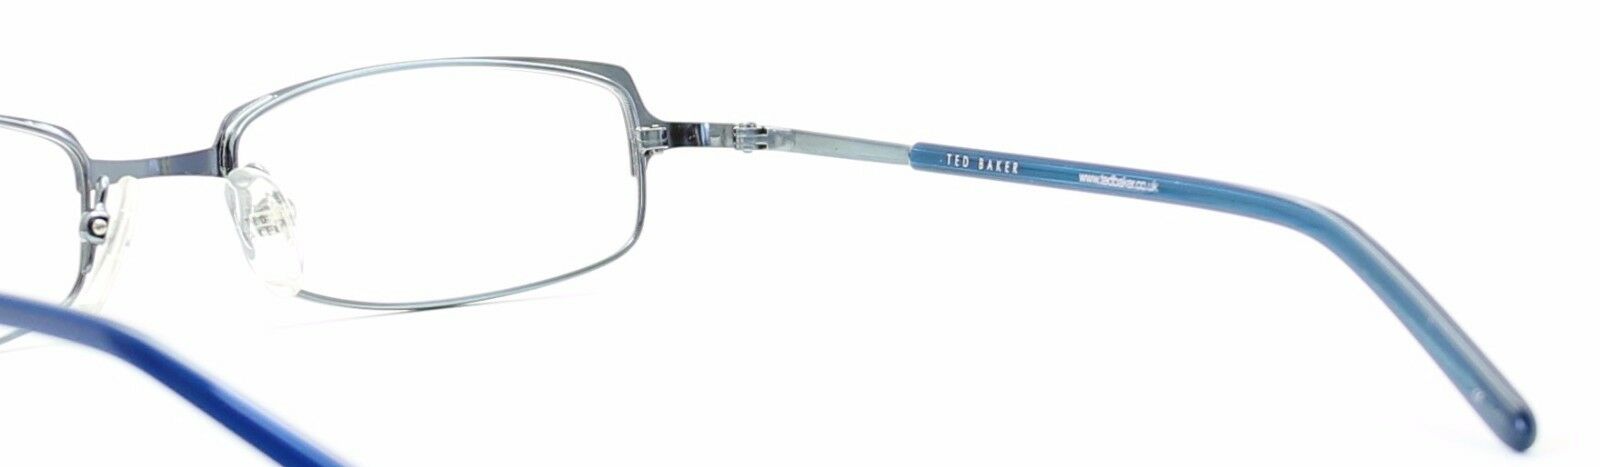 TED BAKER Lazy Daze 4059 696 Eyewear FRAMES Eyeglasses RX Optical - New TRUSTED